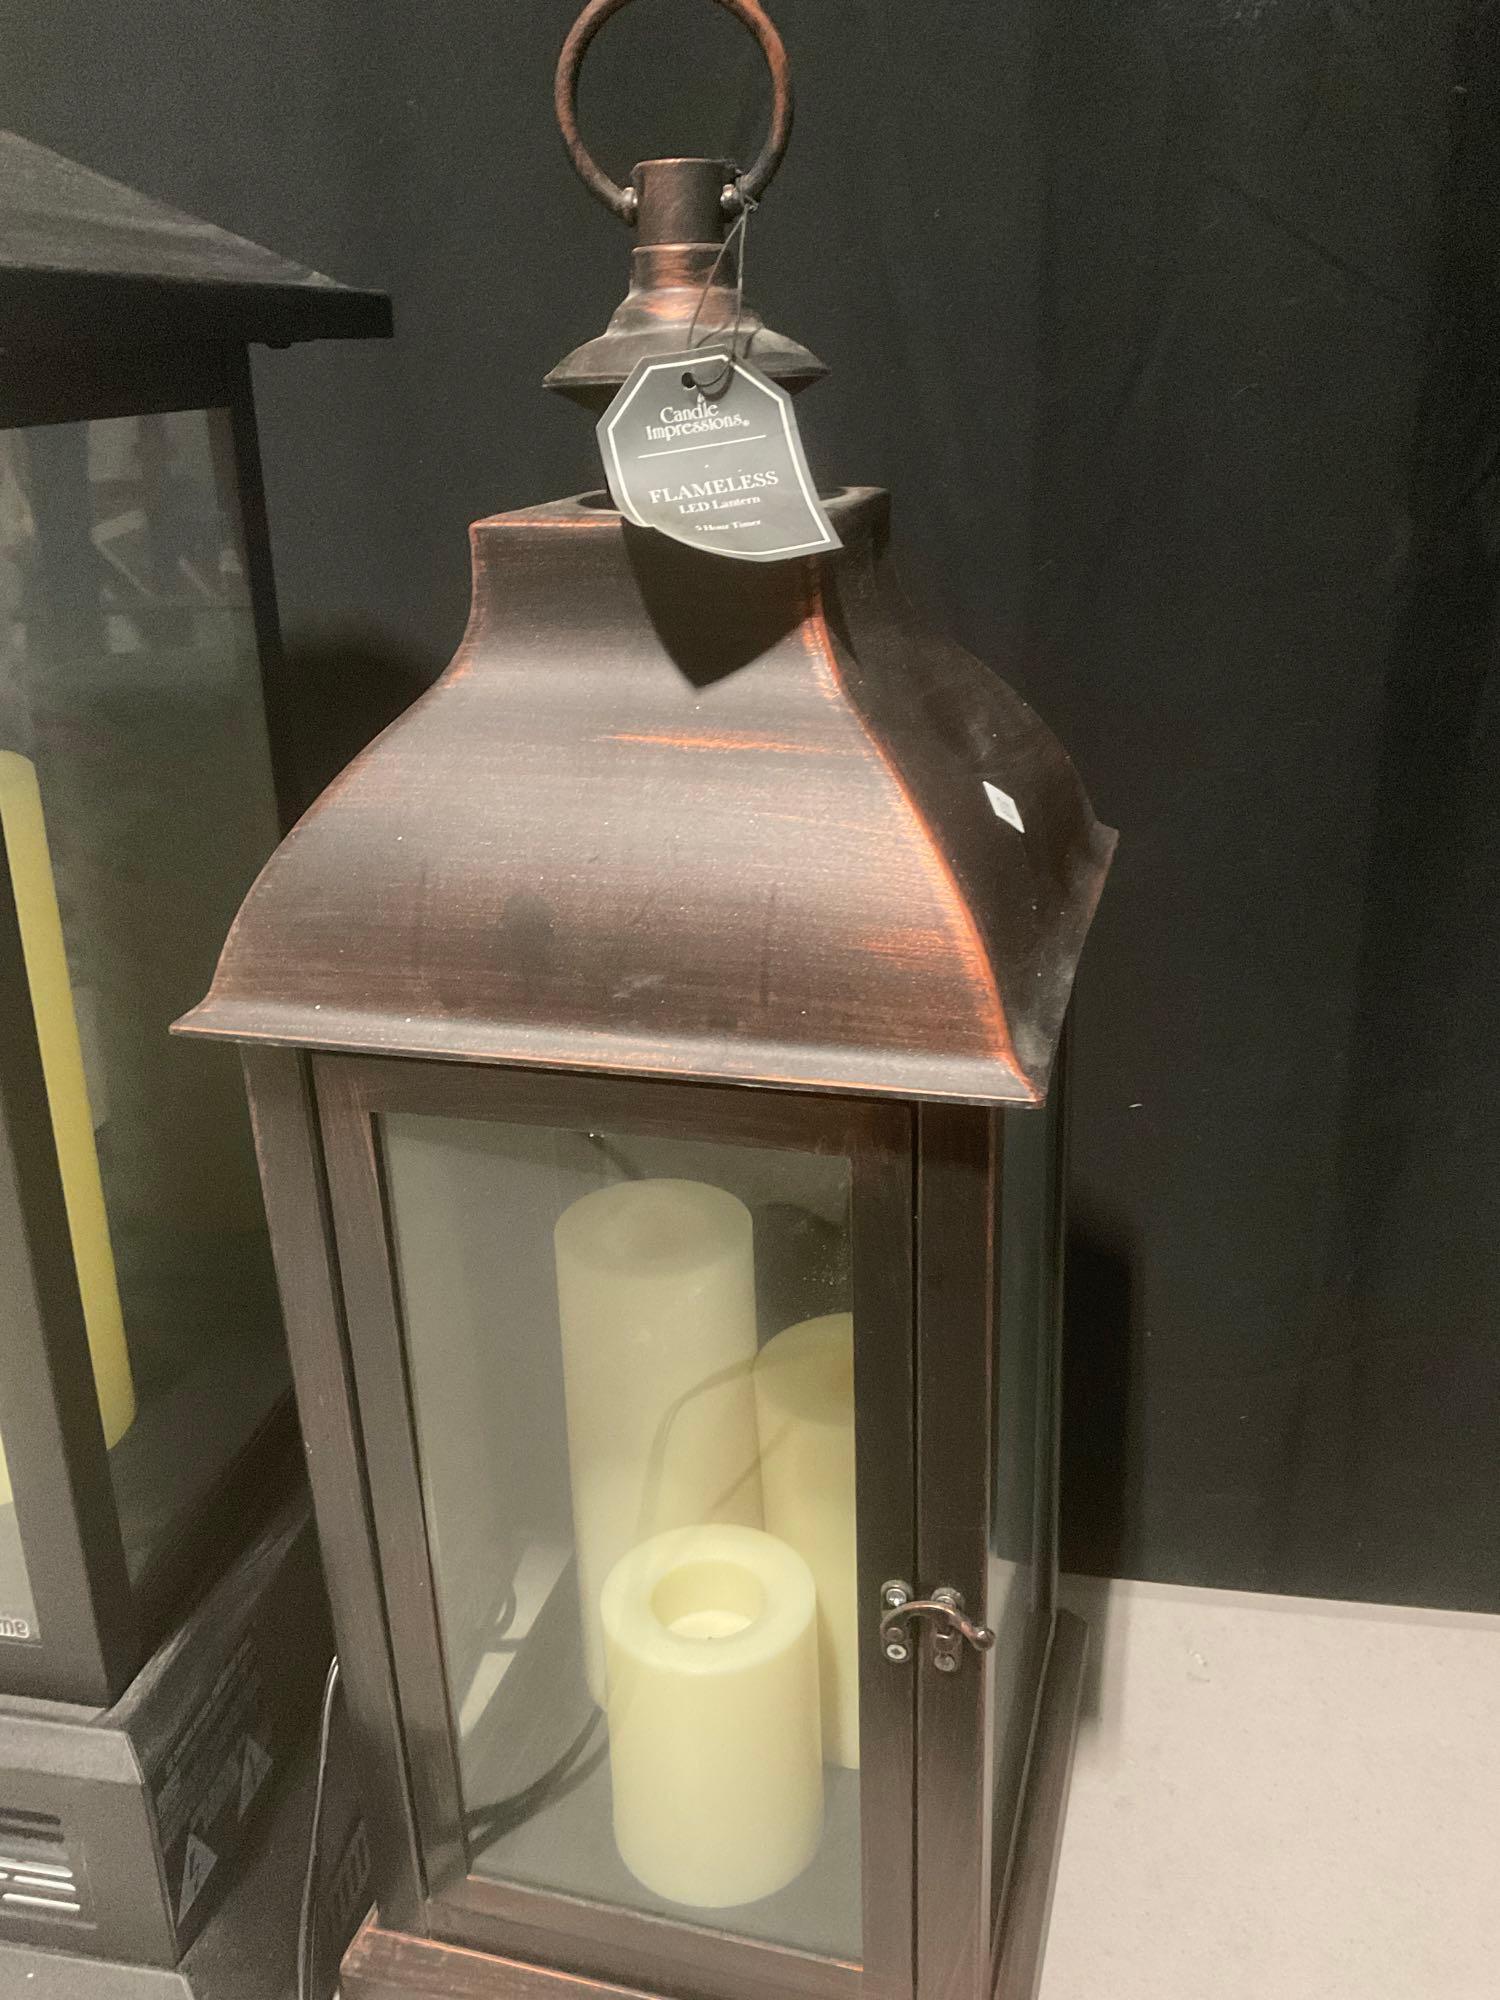 DuraFlame & Candle Impressions Storm Lantern Displays